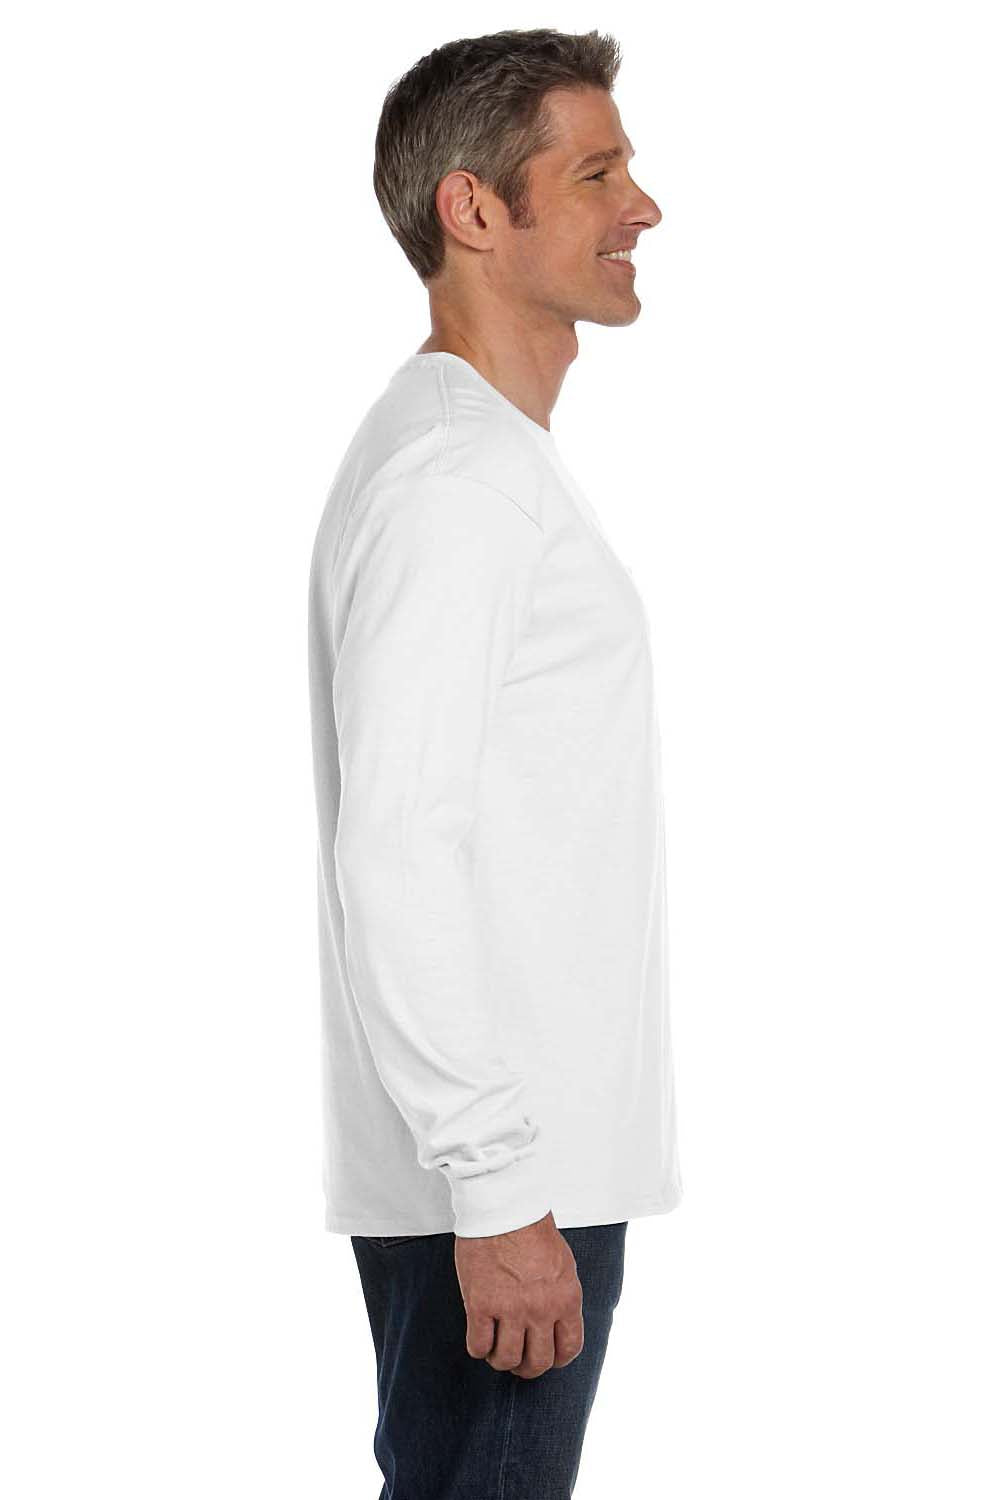 Hanes 5596 Mens ComfortSoft Long Sleeve Crewneck T-Shirt w/ Pocket White Side